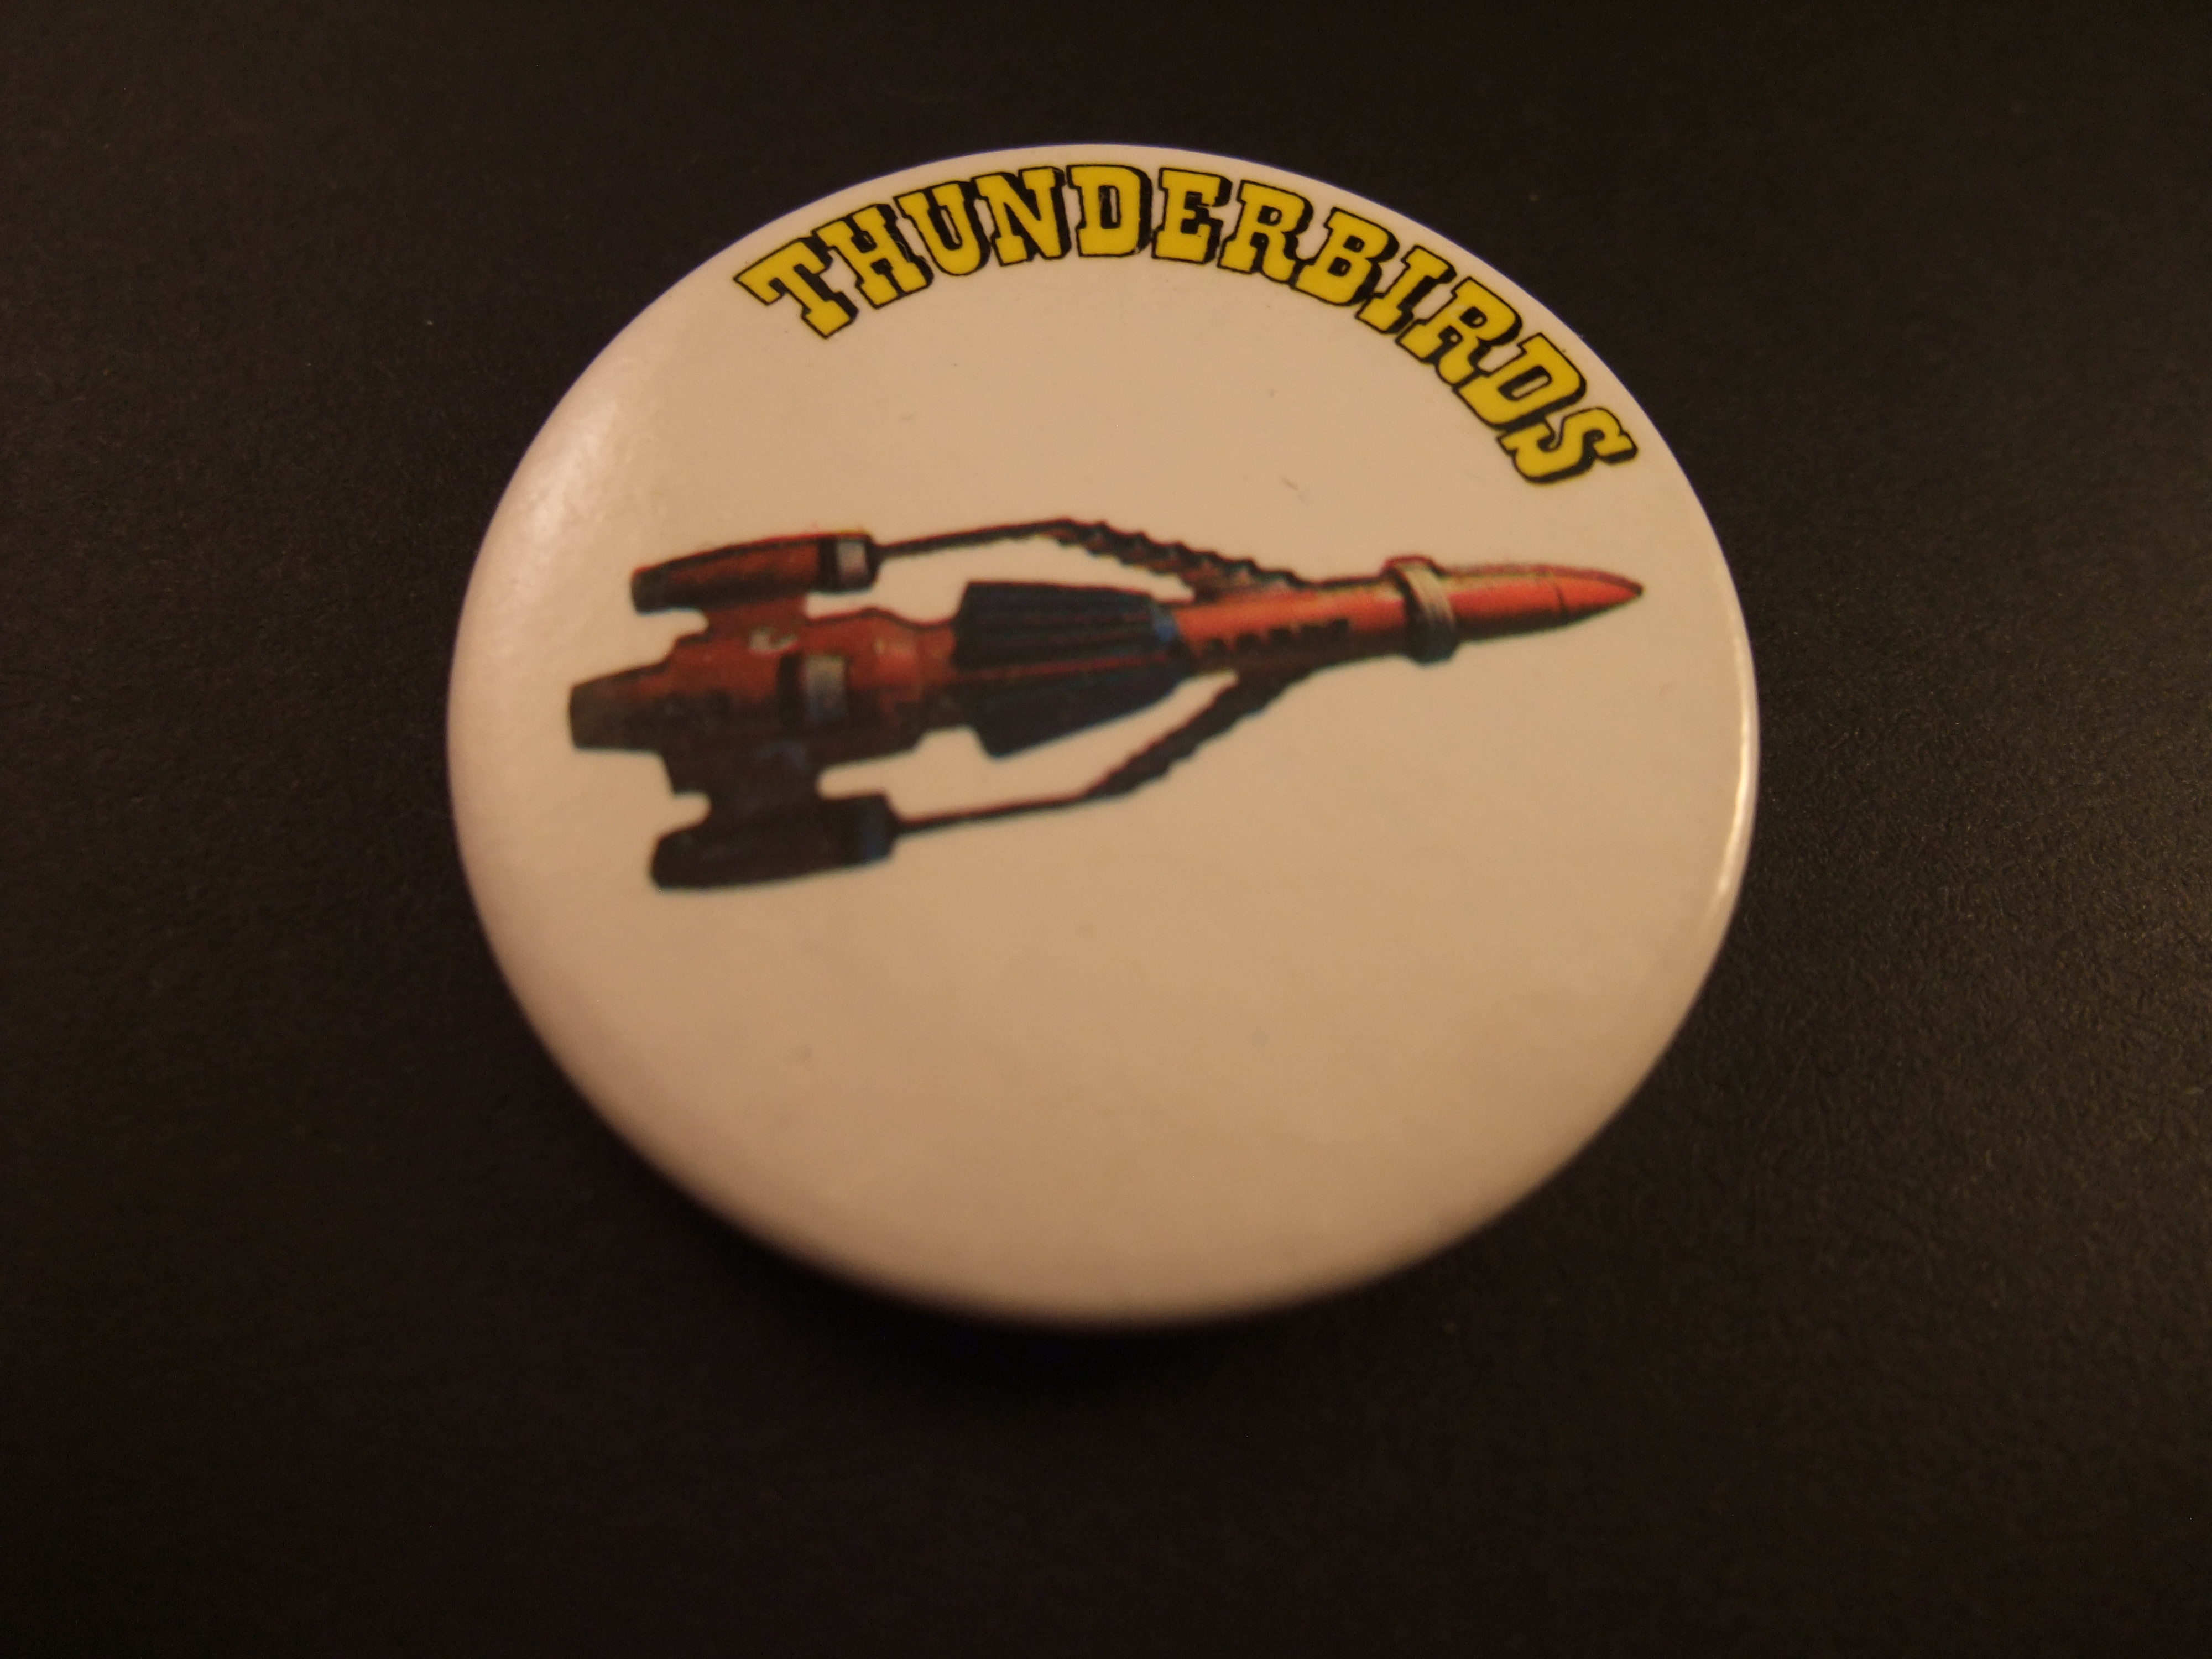 Thunderbirds Britse science-fiction serie jaren 60 ( Thunderbird 3  ingle-stage-to-orbit (SSTO) ruimtevoertuig van International Rescue)